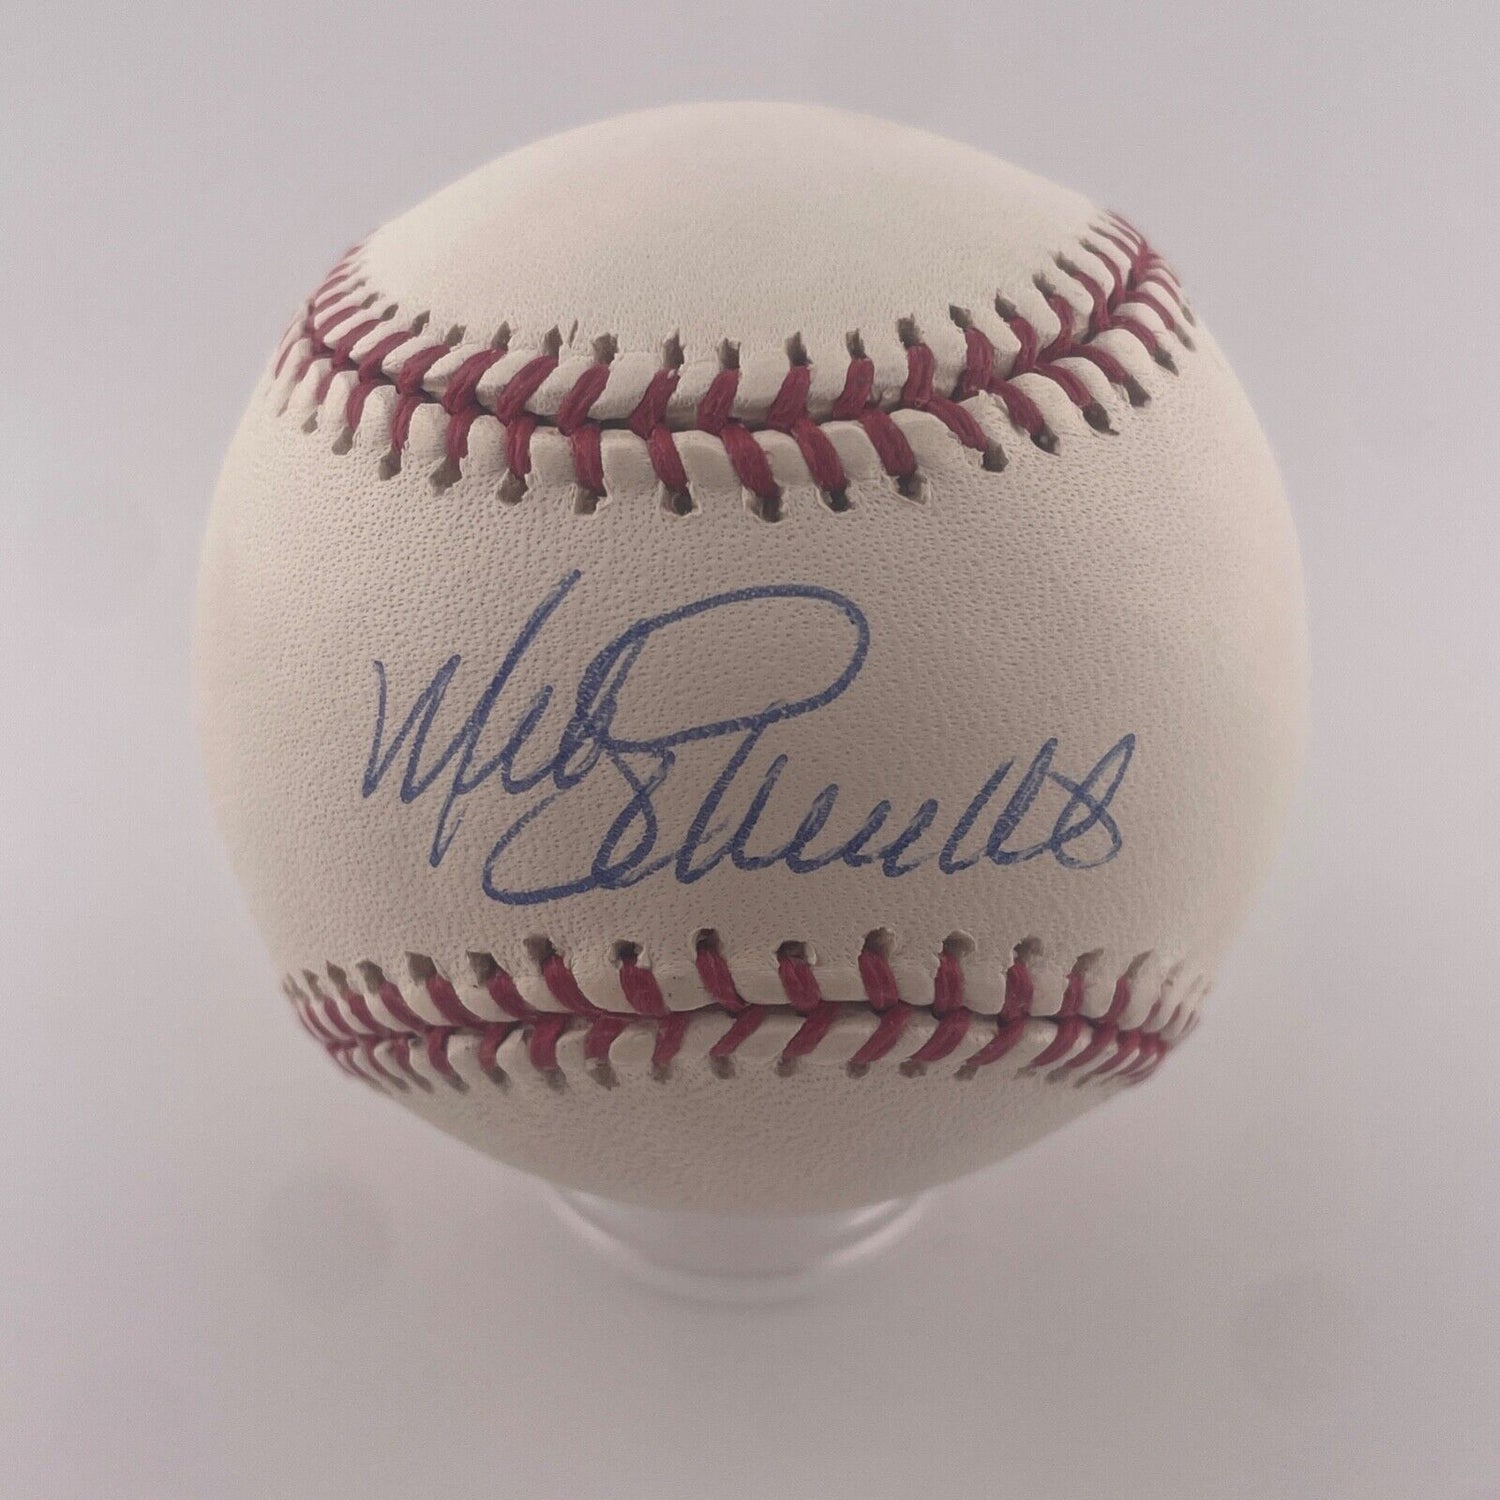 Mike Schmidt Single Signed Baseball. Philadelphia Phillies. Mounted Memories